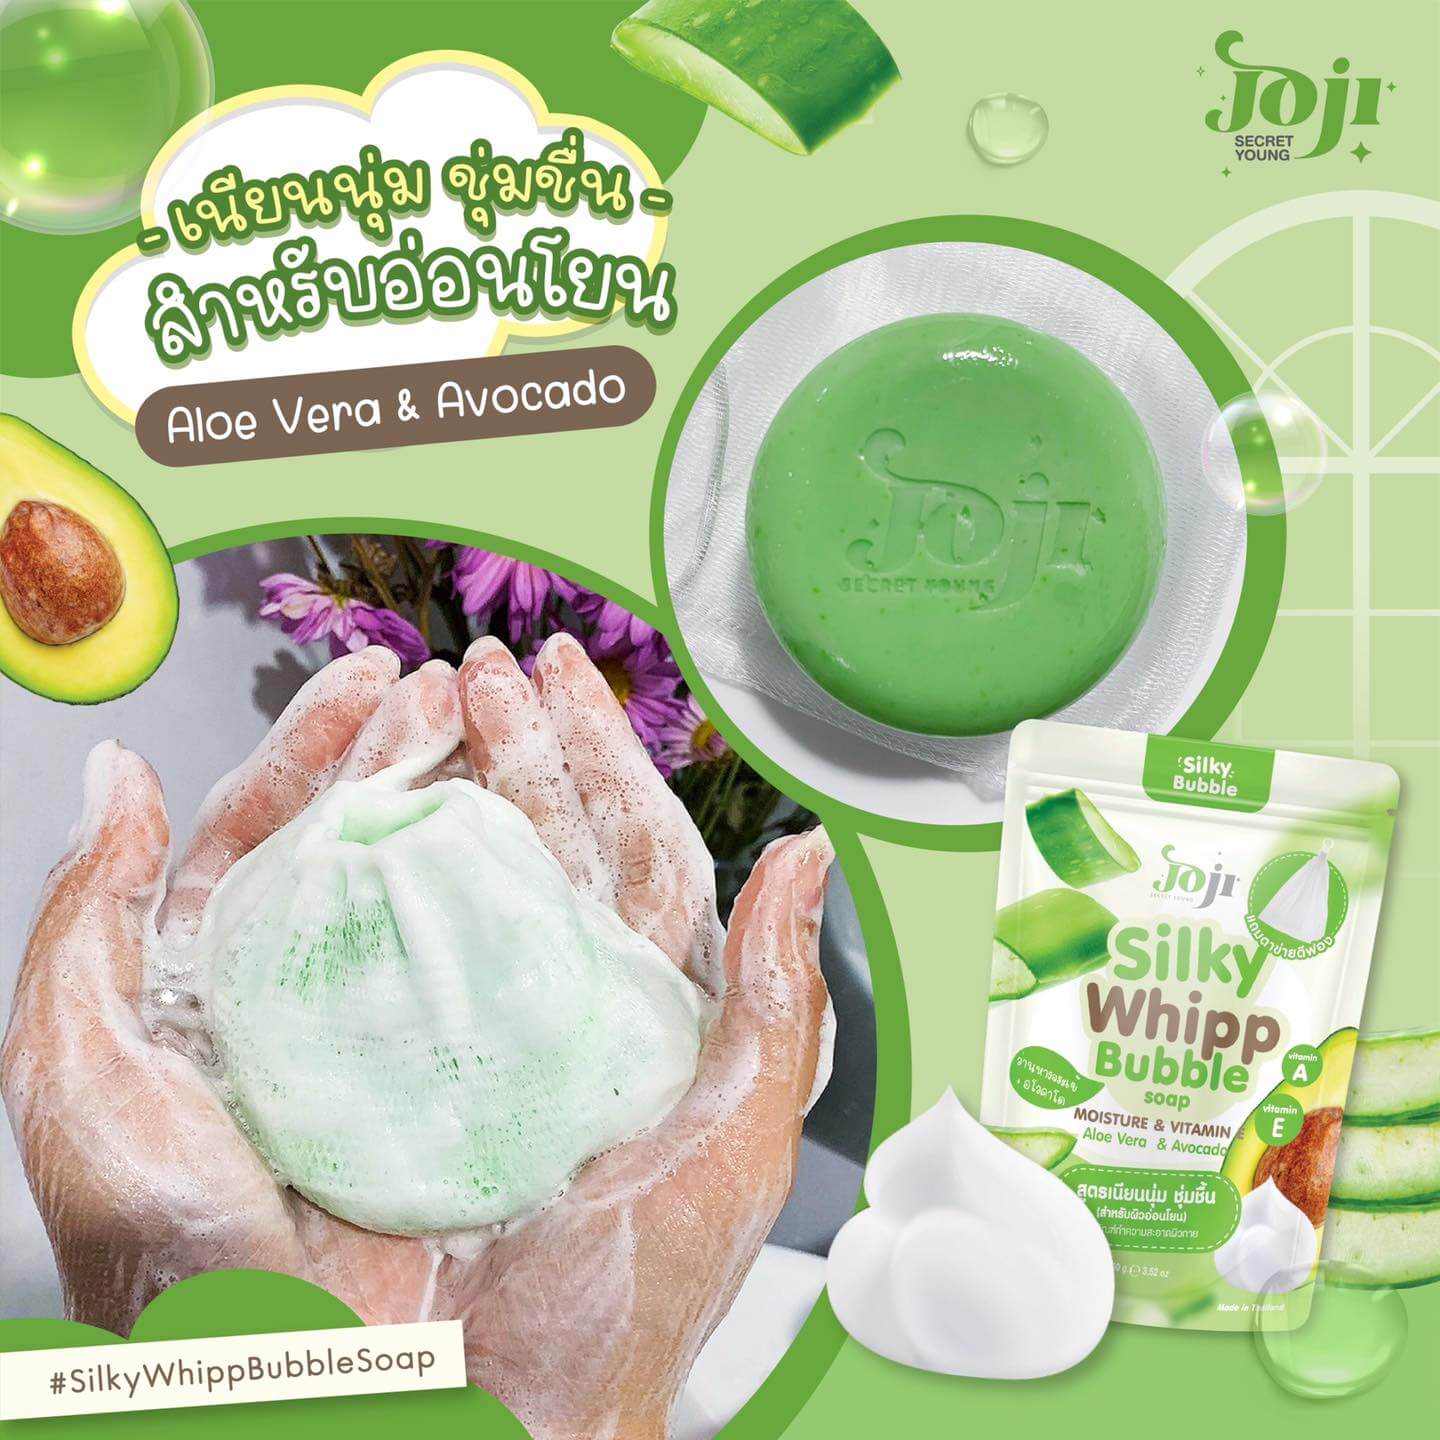 JOJI SECRET YOUNG Silky Whipp Bubble Soap #Moisture&Vitamin E